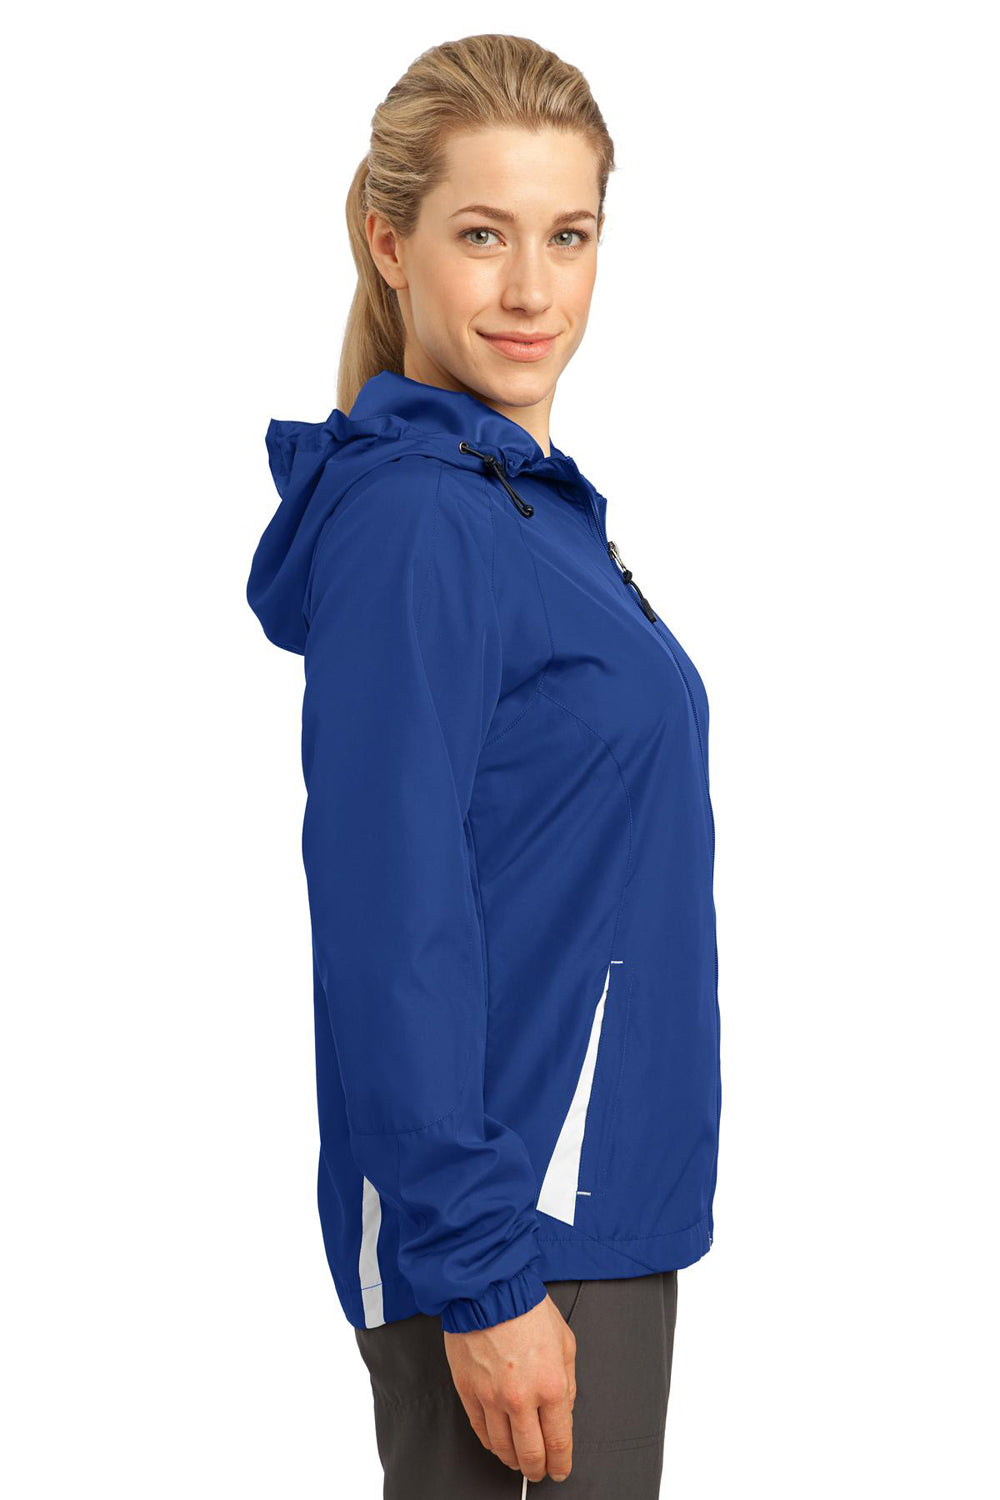 Sport-Tek LST76 Womens Water Resistant Full Zip Hooded Jacket Royal Blue Side